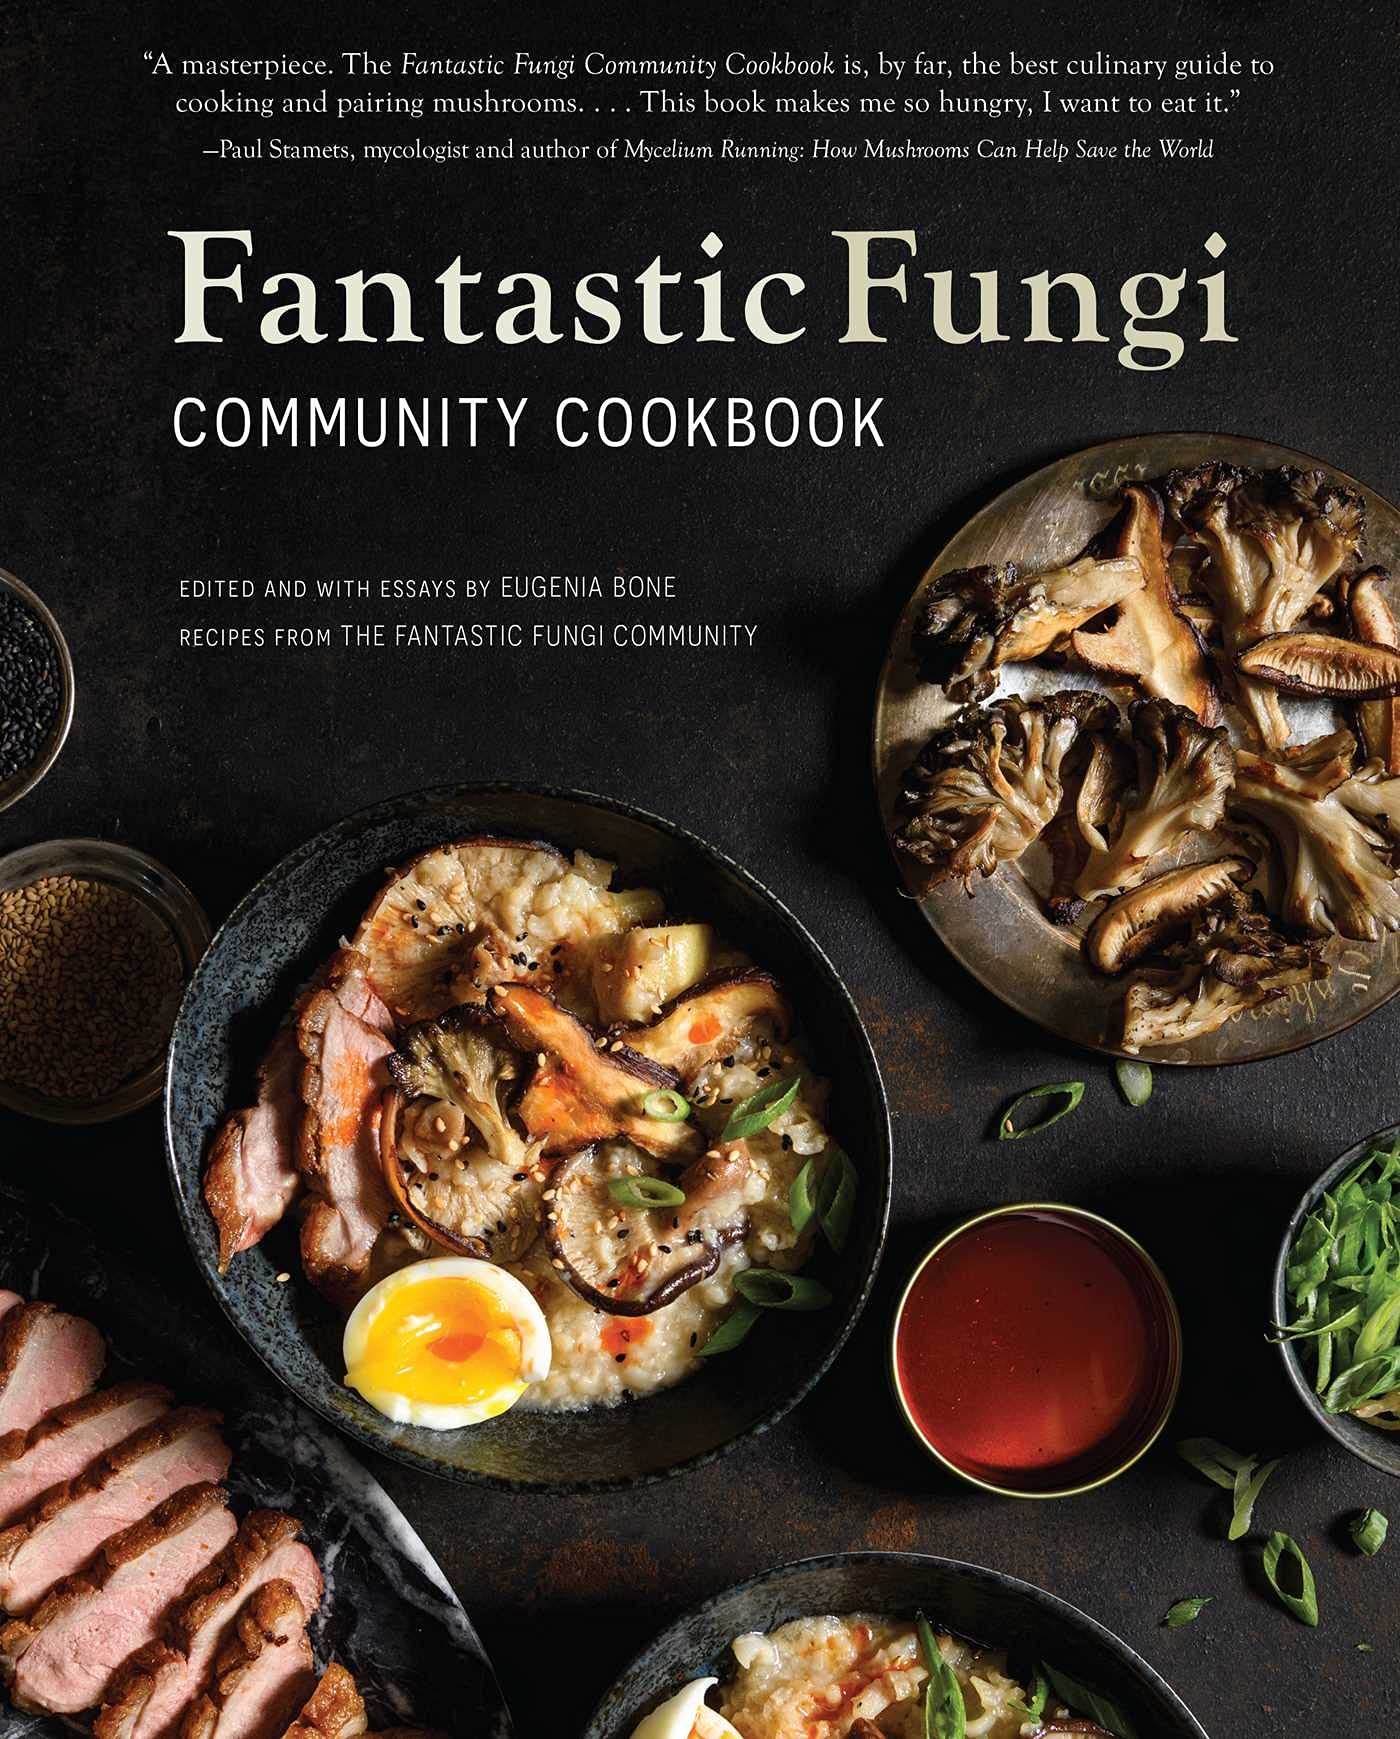 The Fantastic Fungi Community Cookbook